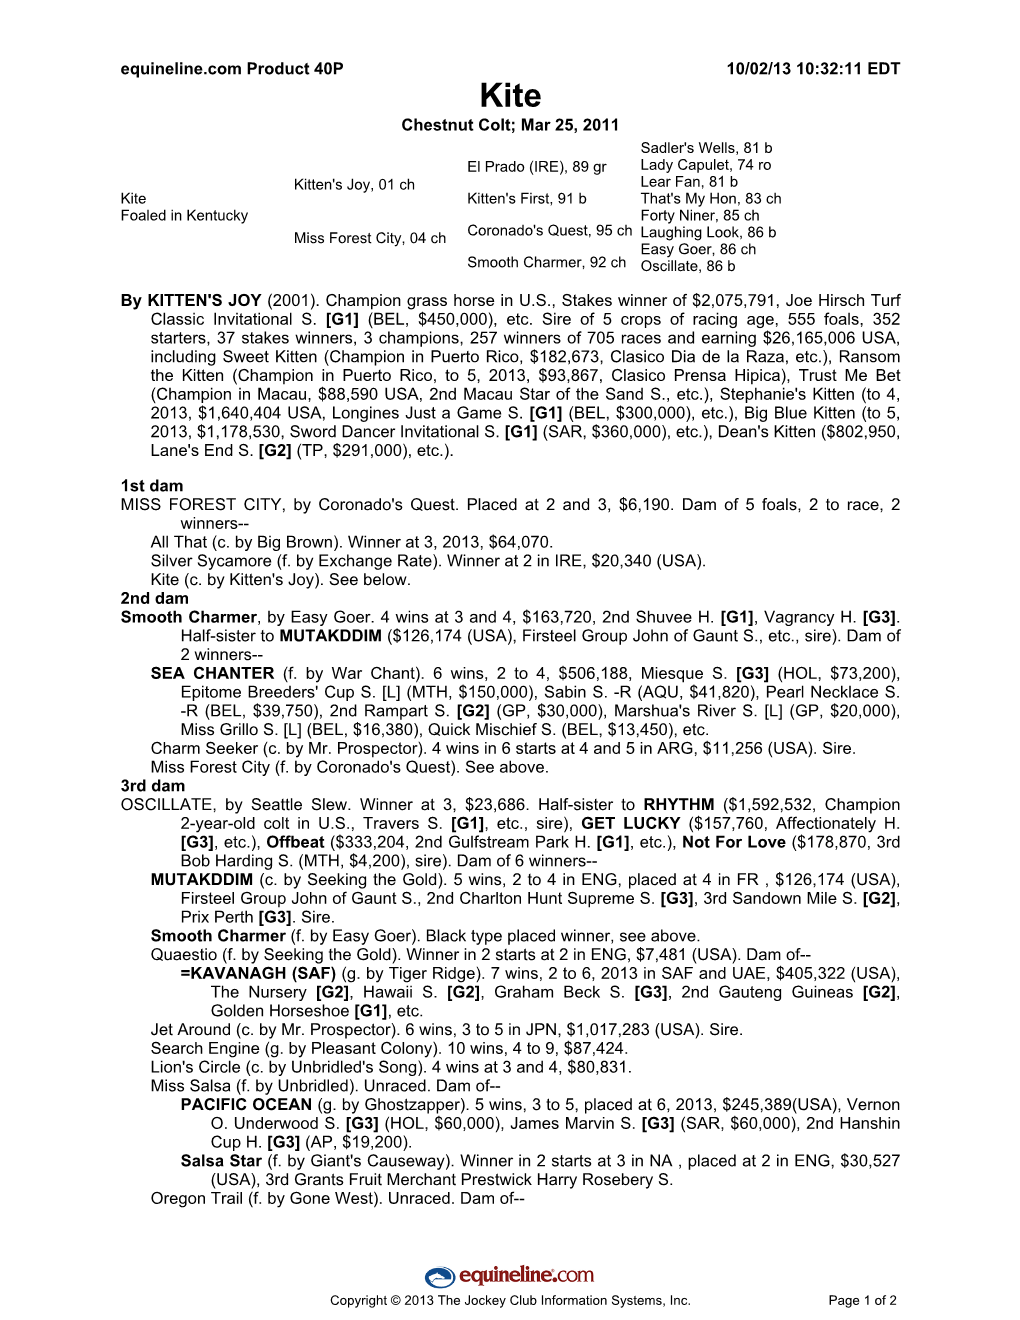 By KITTEN's JOY (2001). Champion Grass Horse in U.S., Stakes Winner of $2,075,791, Joe Hirsch Turf Classic Invitational S